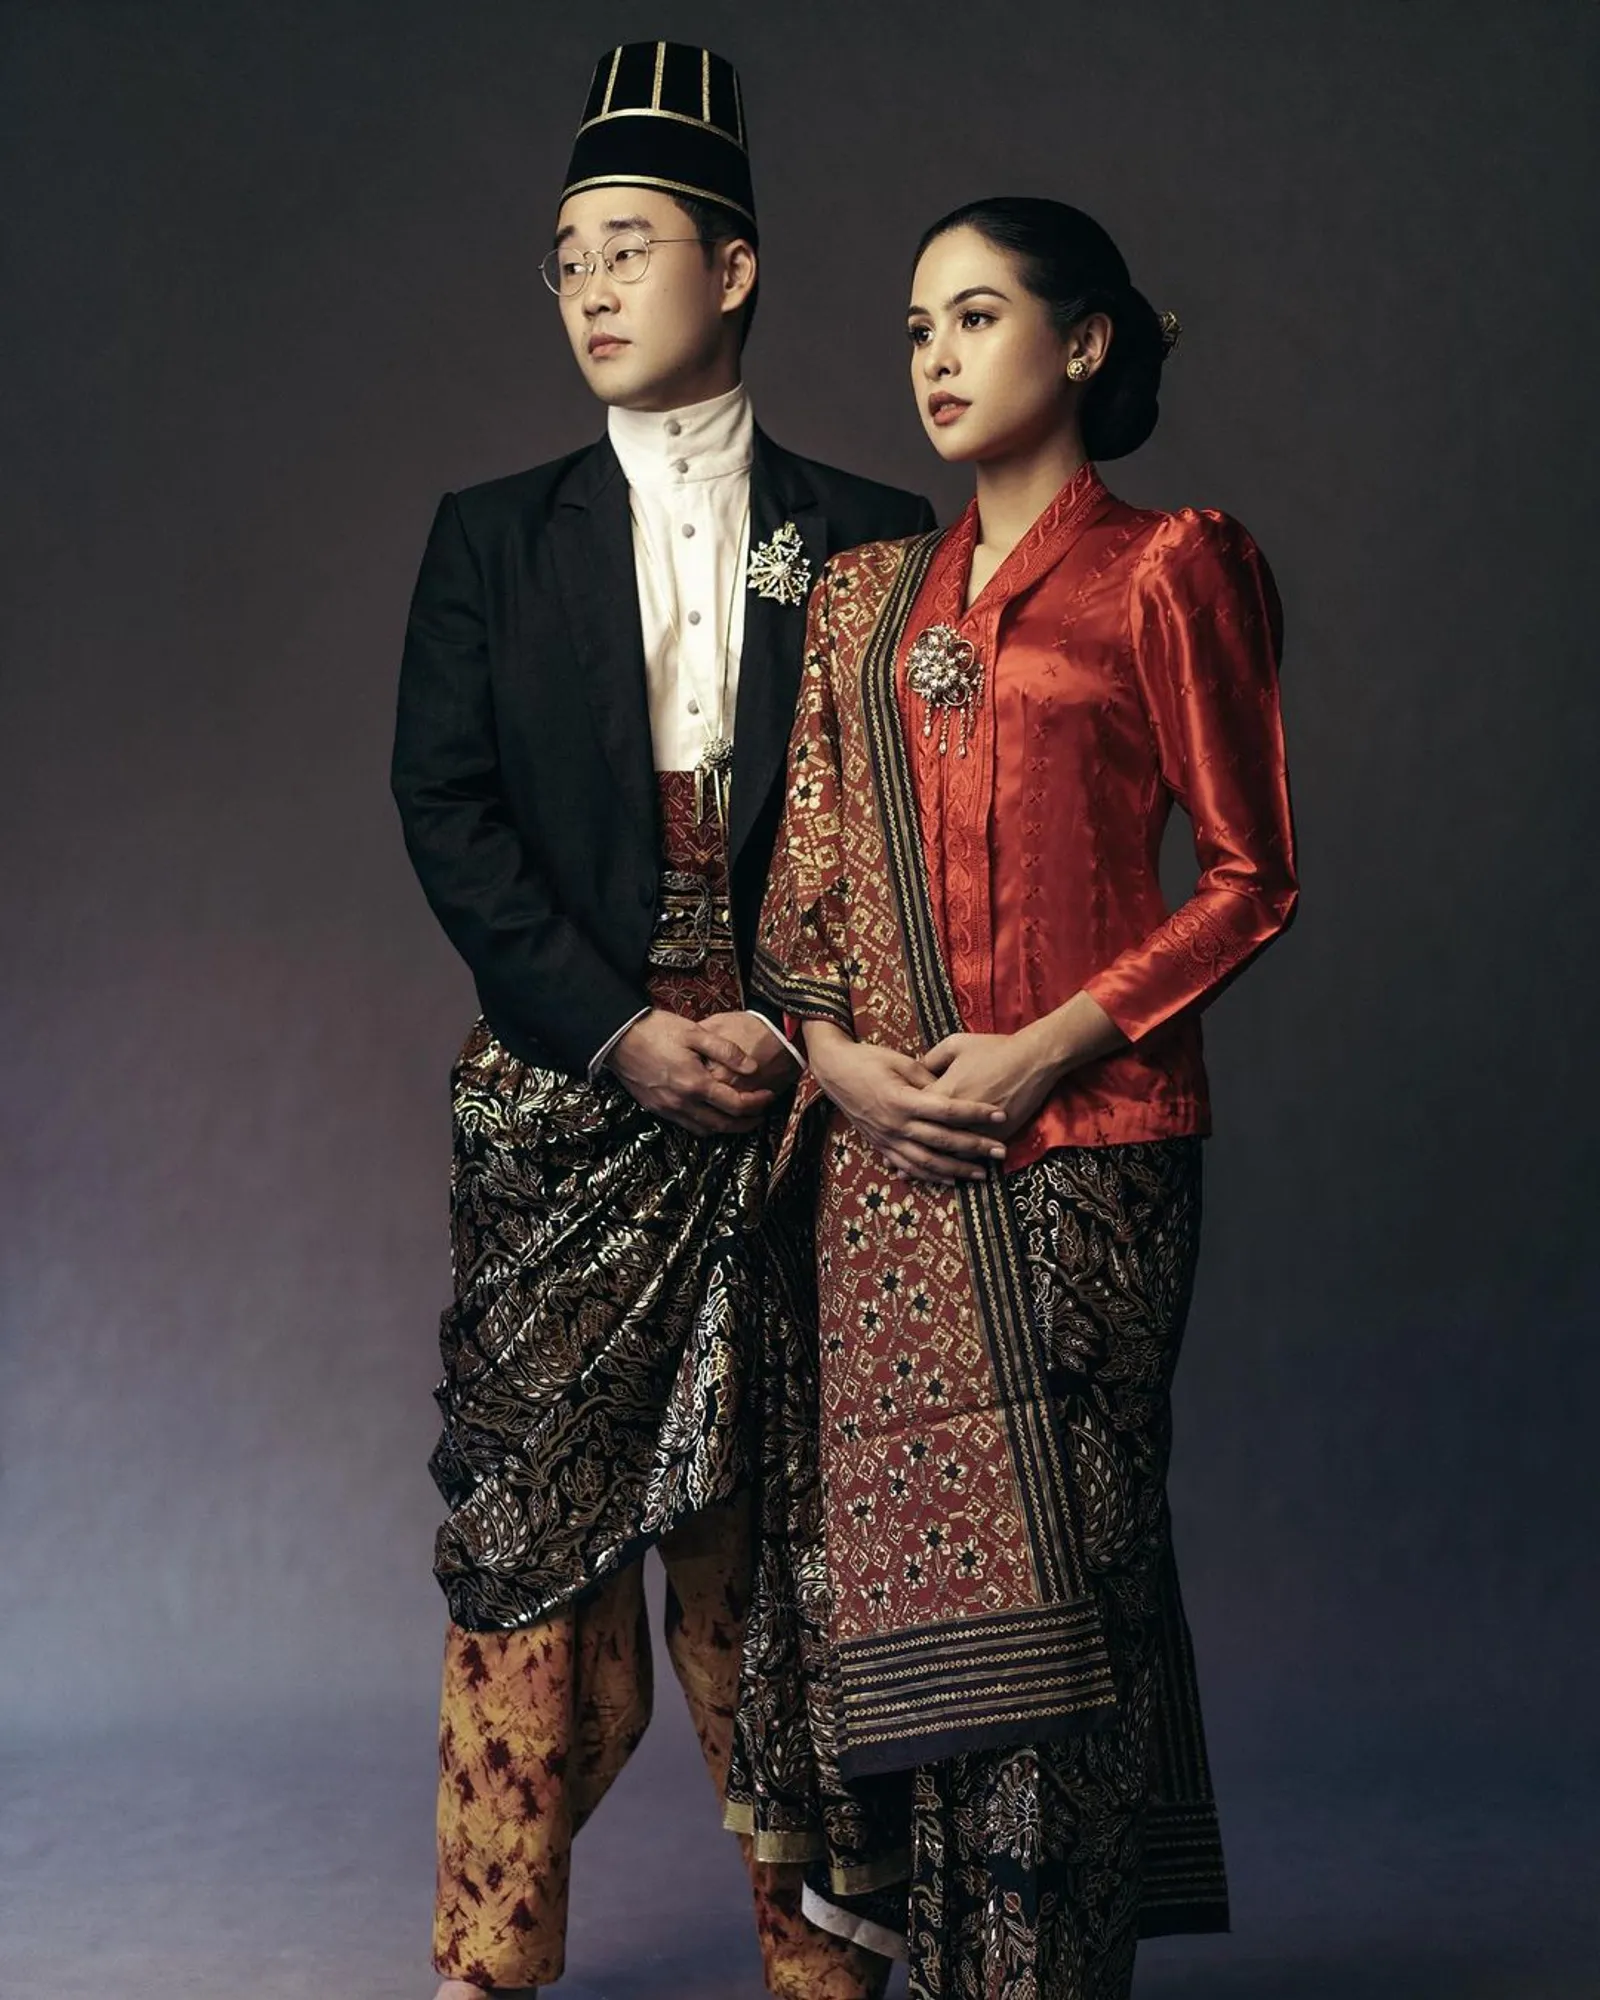 Potret Maudy Ayunda dan Suami dalam Balutan Pakaian Adat Indonesia